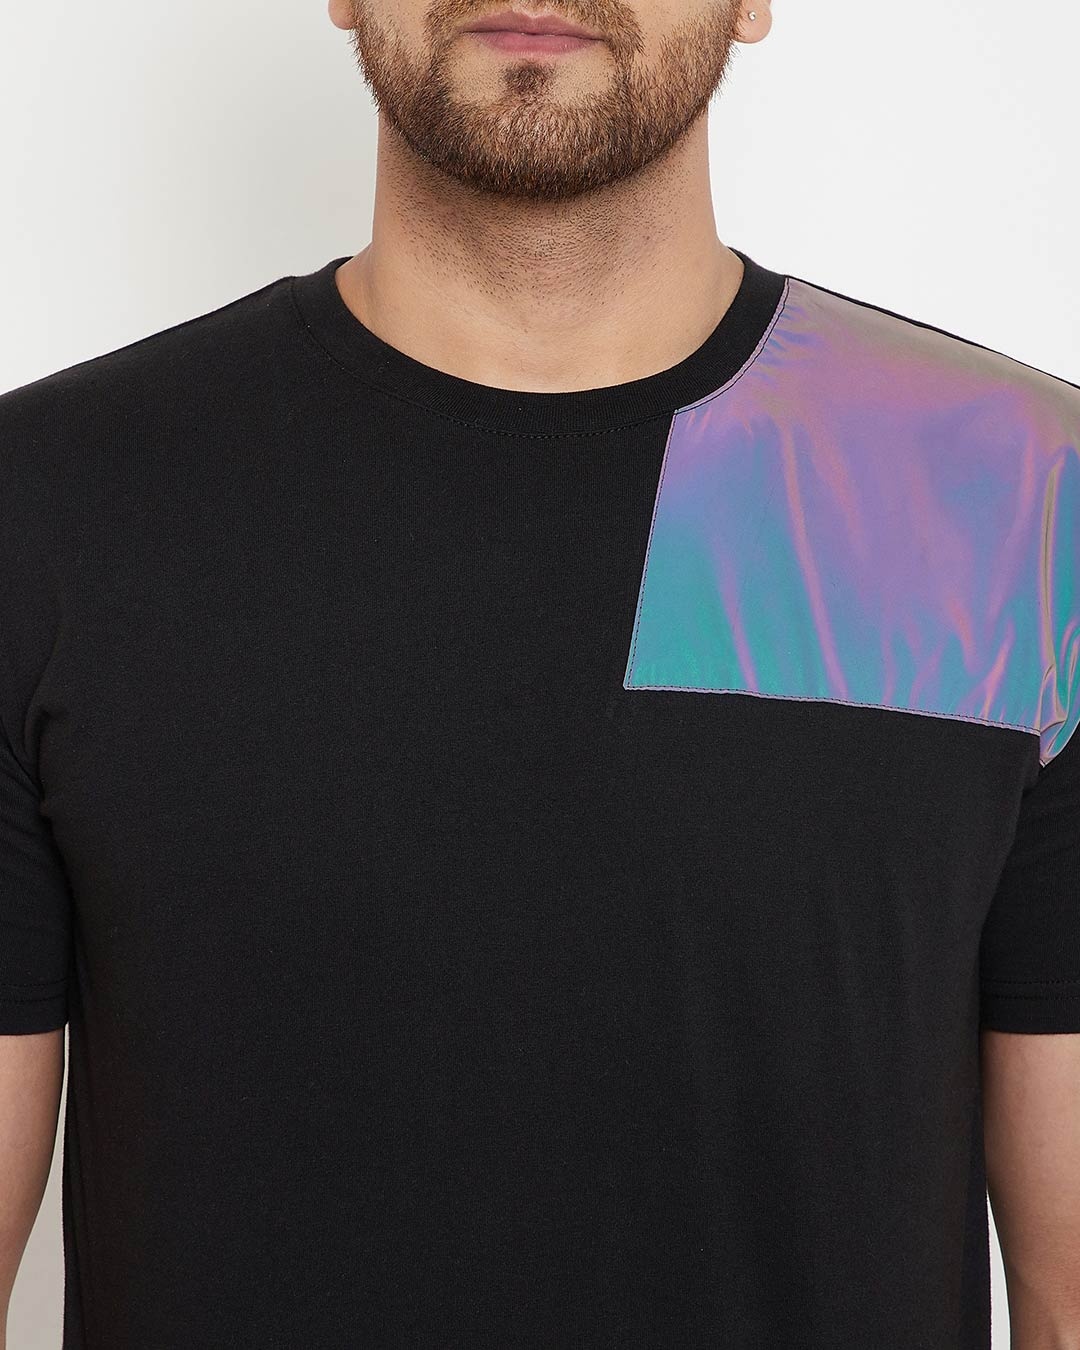 Shop Black Rainbow Reflective Patched T-Shirt